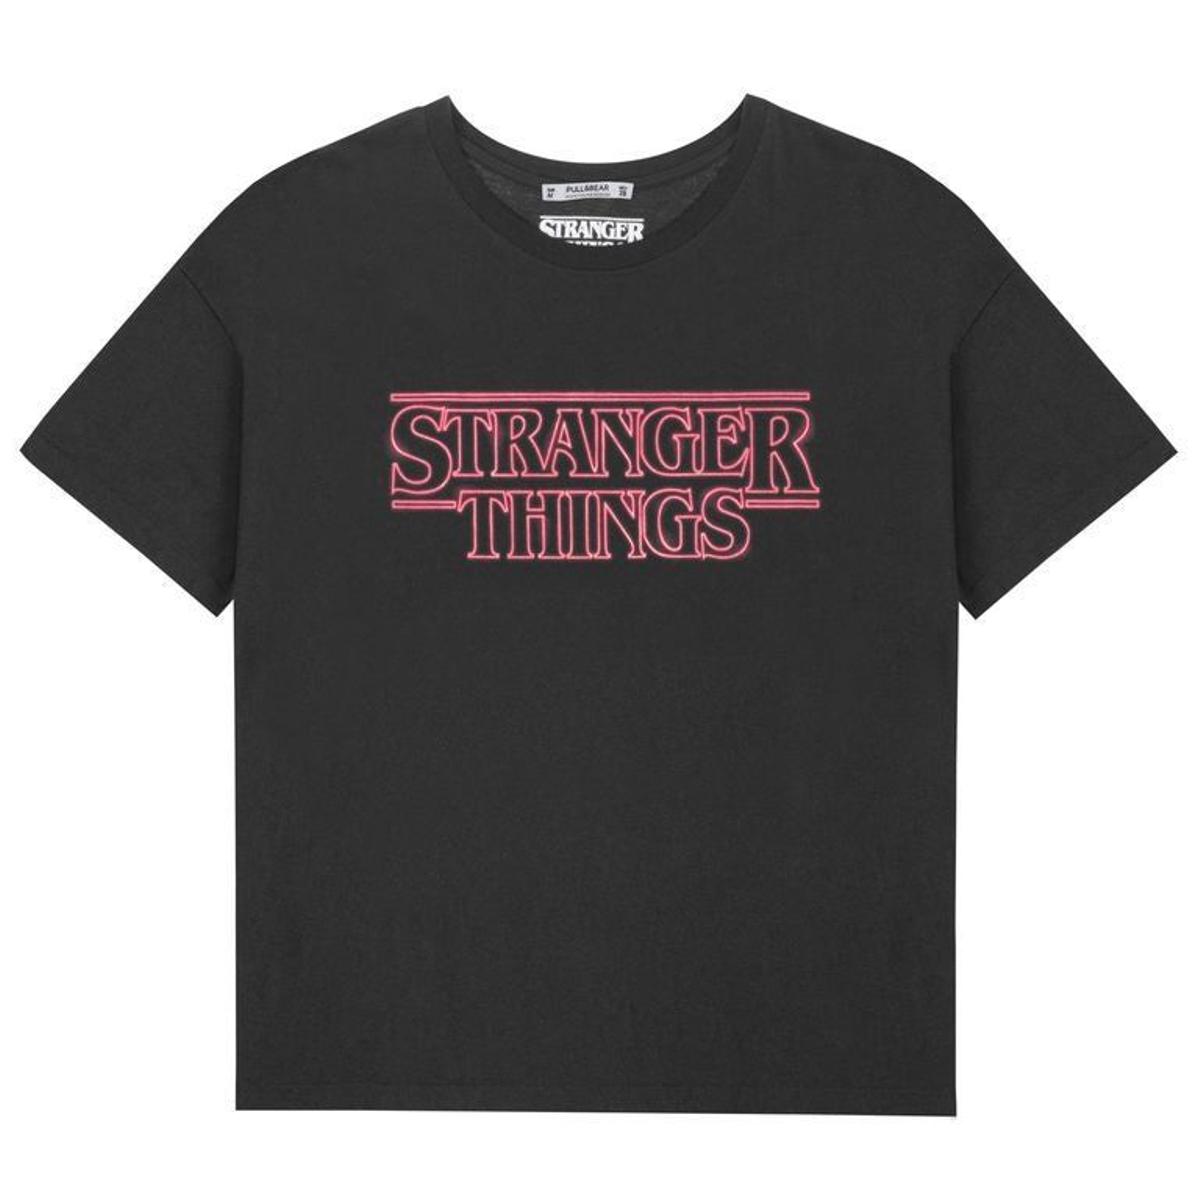 Camiseta negra con el logo de 'Stranger things', de Pull and Bear